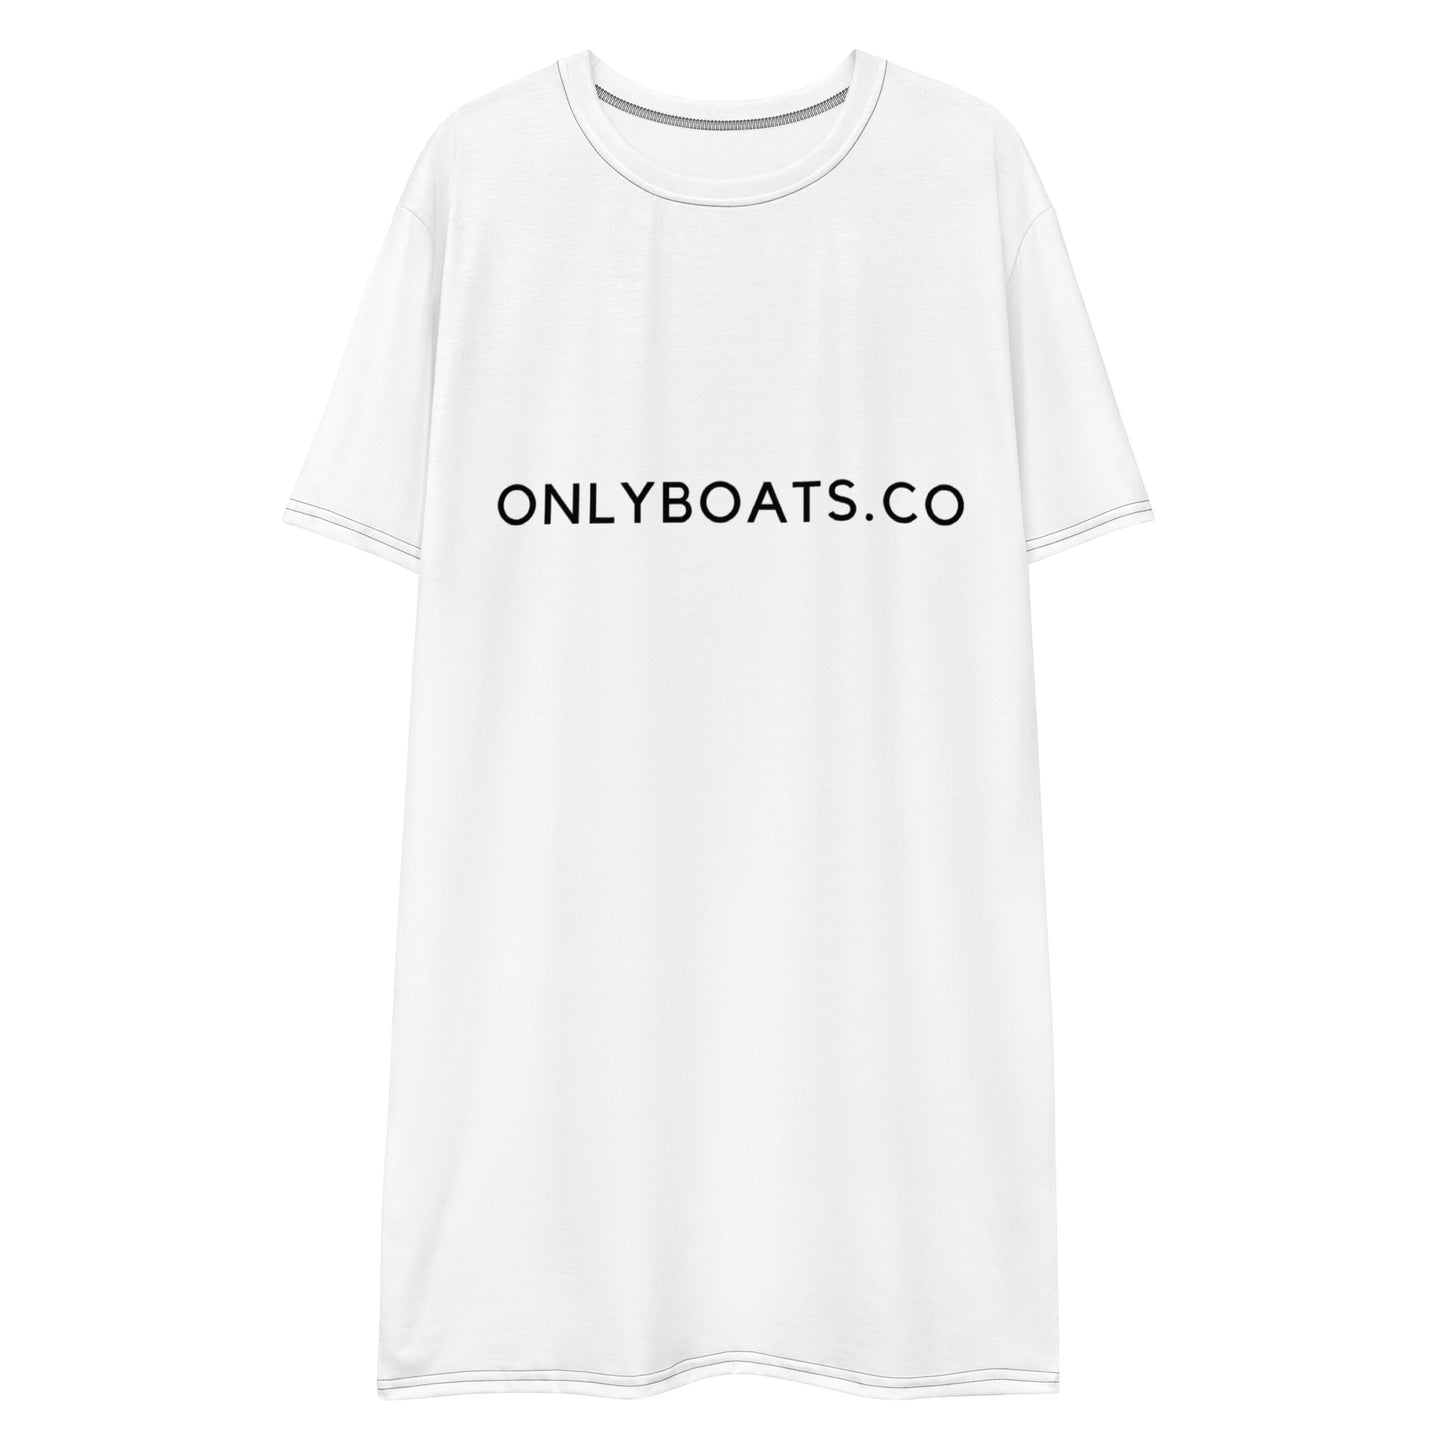 Onlyboats.co women long T-shirt - ONLY BOATS